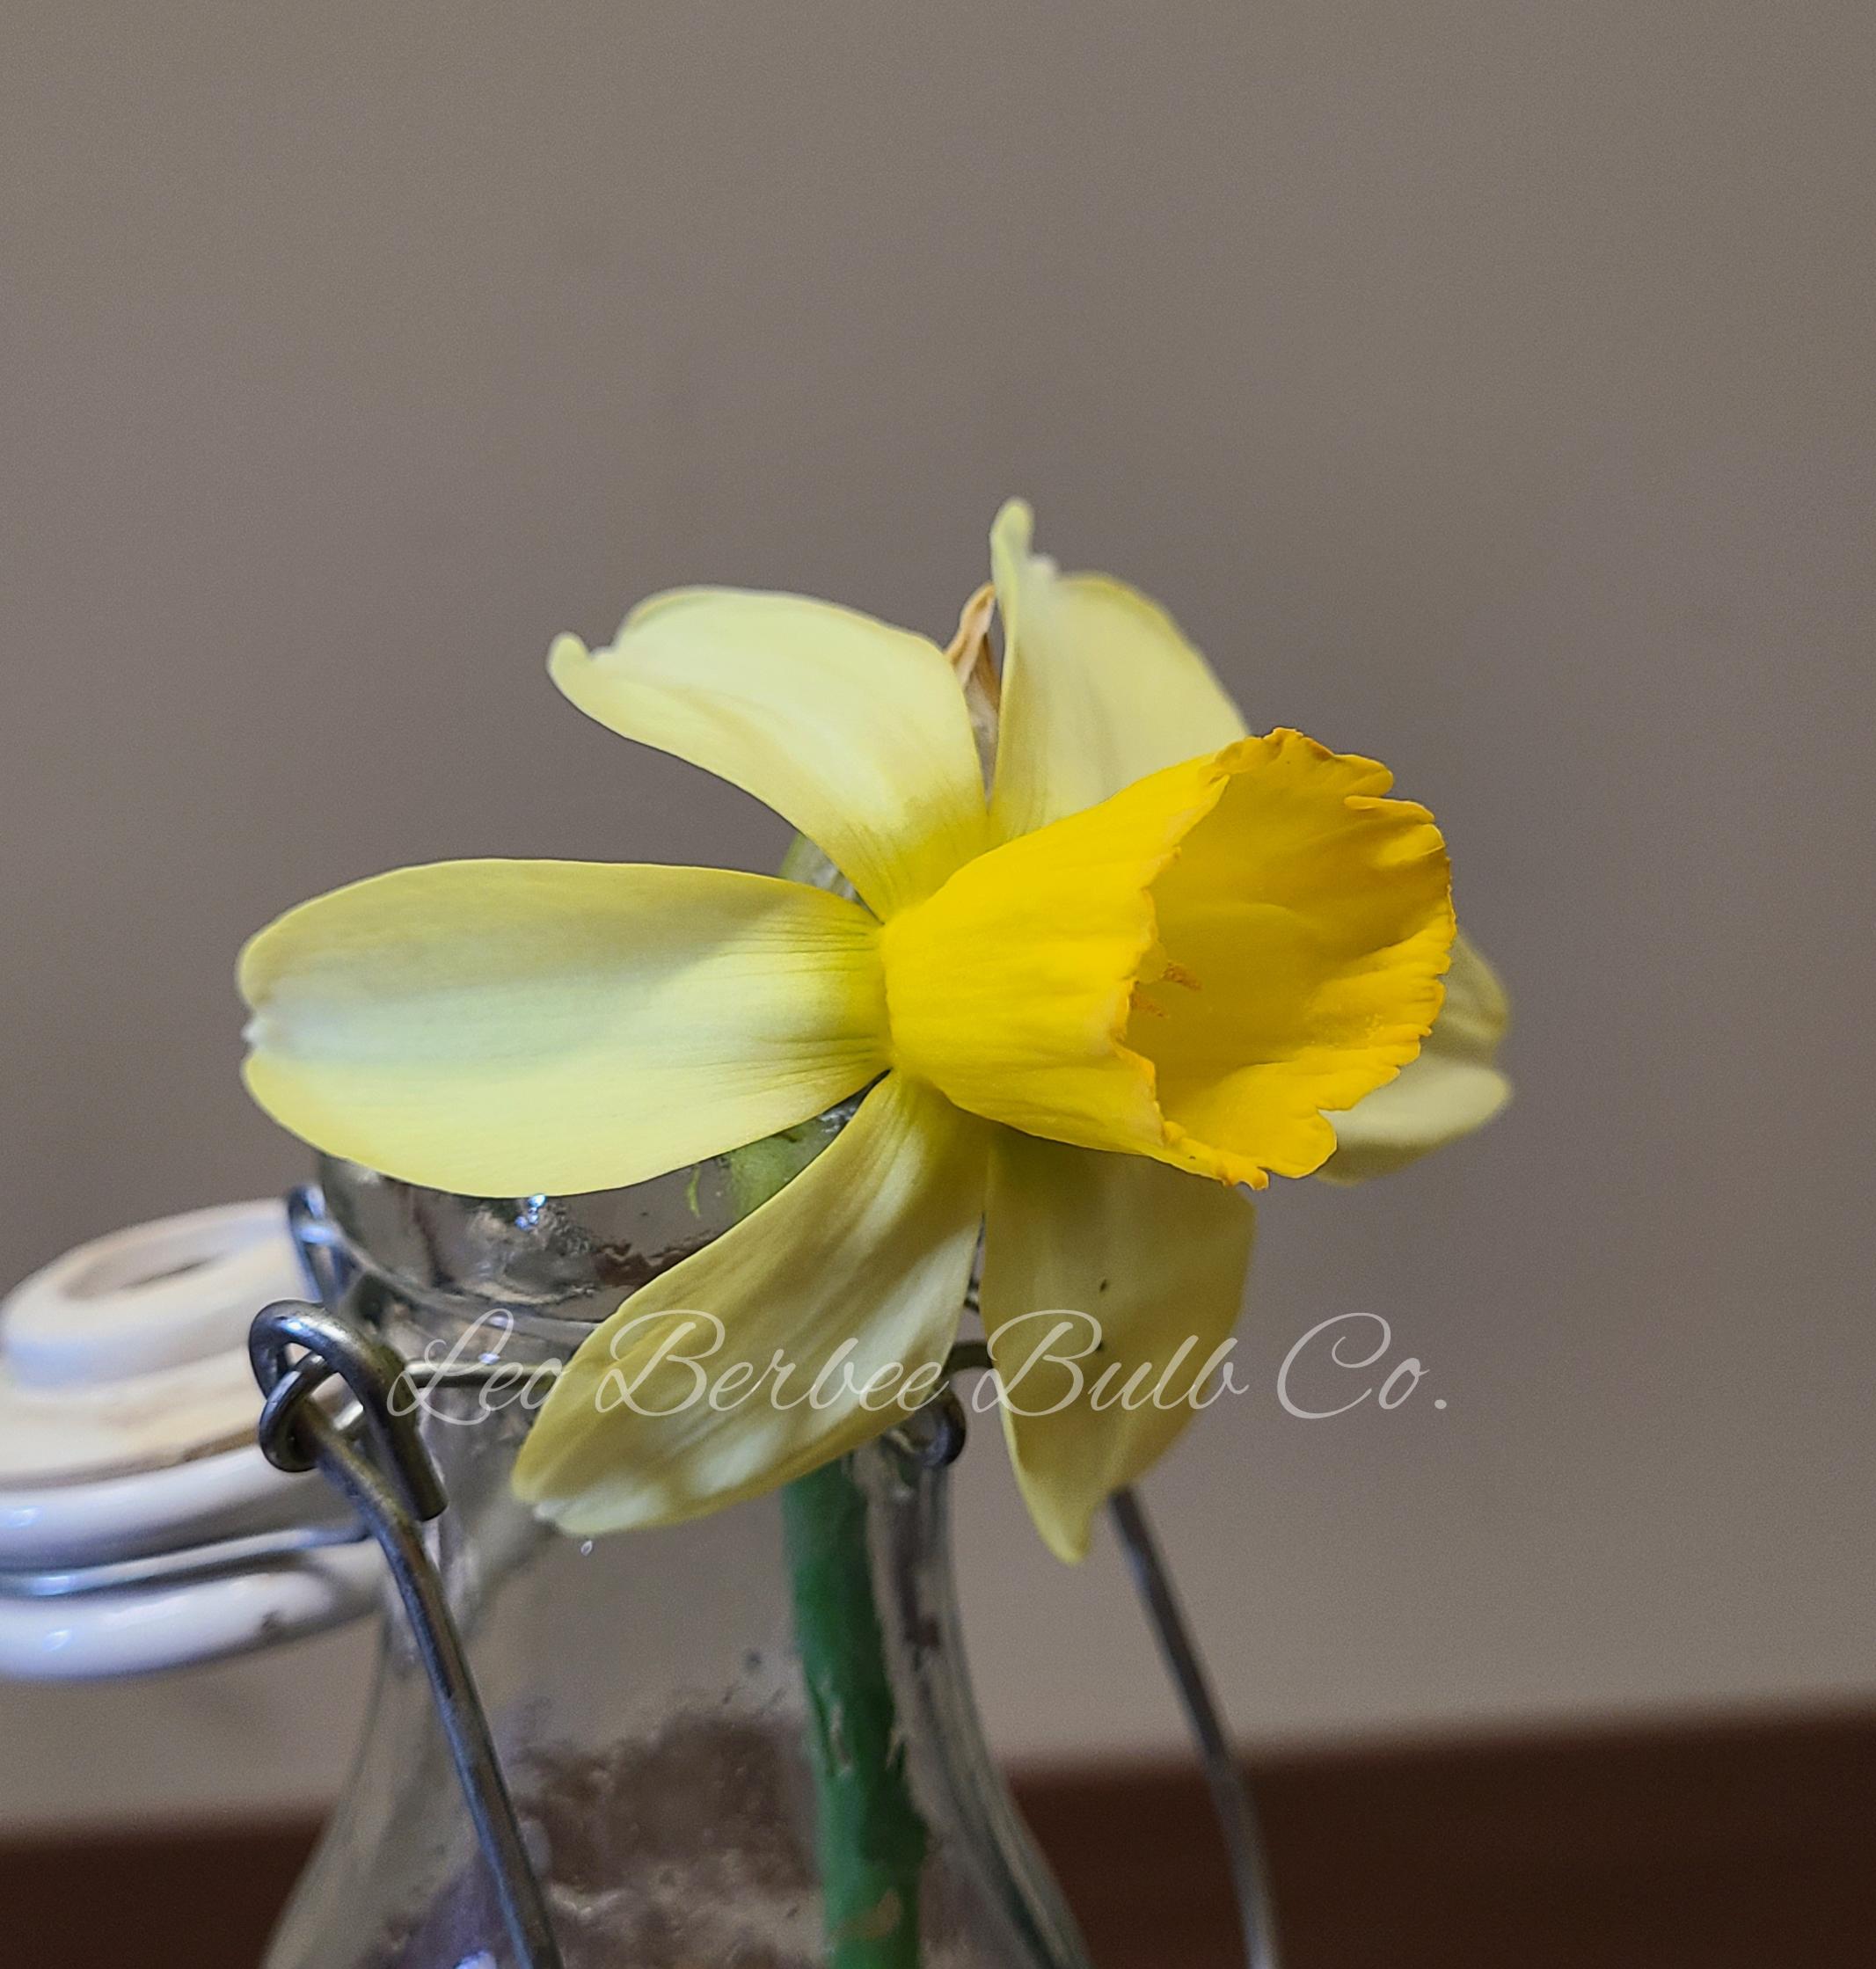 Daffodil Cyclmineus 'Carice' - from Leo Berbee Bulb Company